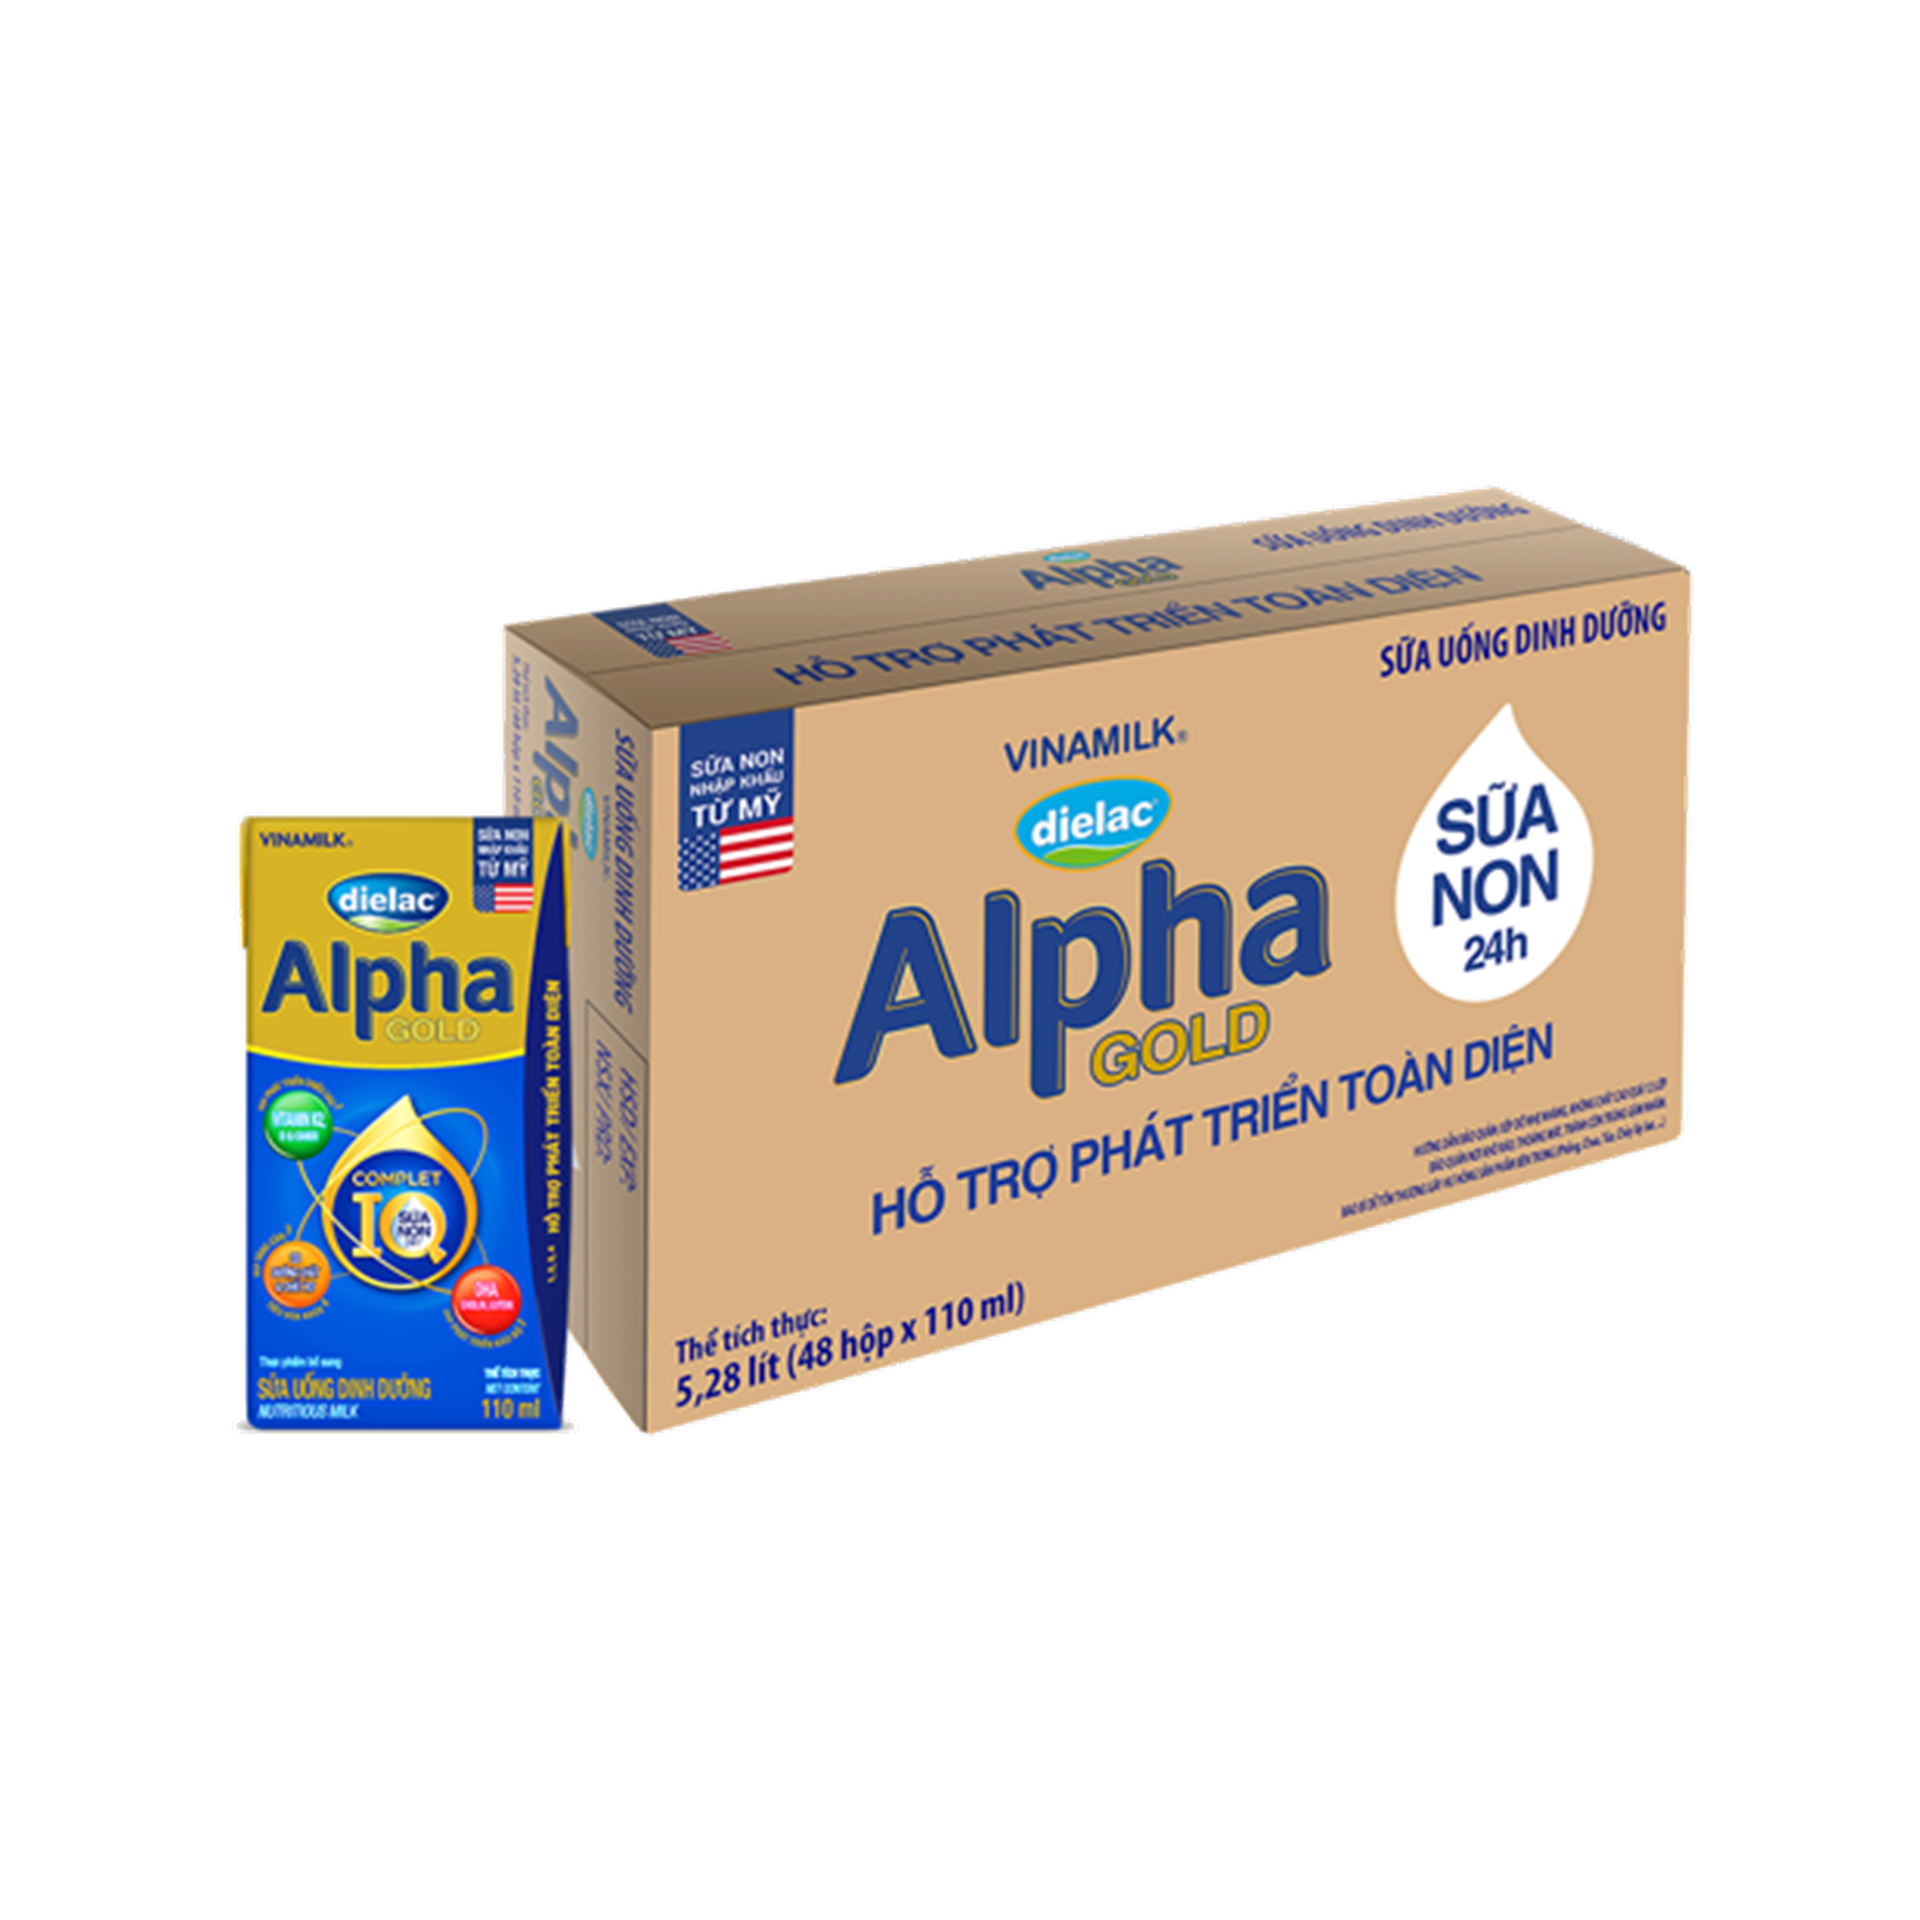 Sữa Uống Dinh Dưỡng Dielac Alpha Gold (Sữa non) - Thùng 48 hộp 110ml